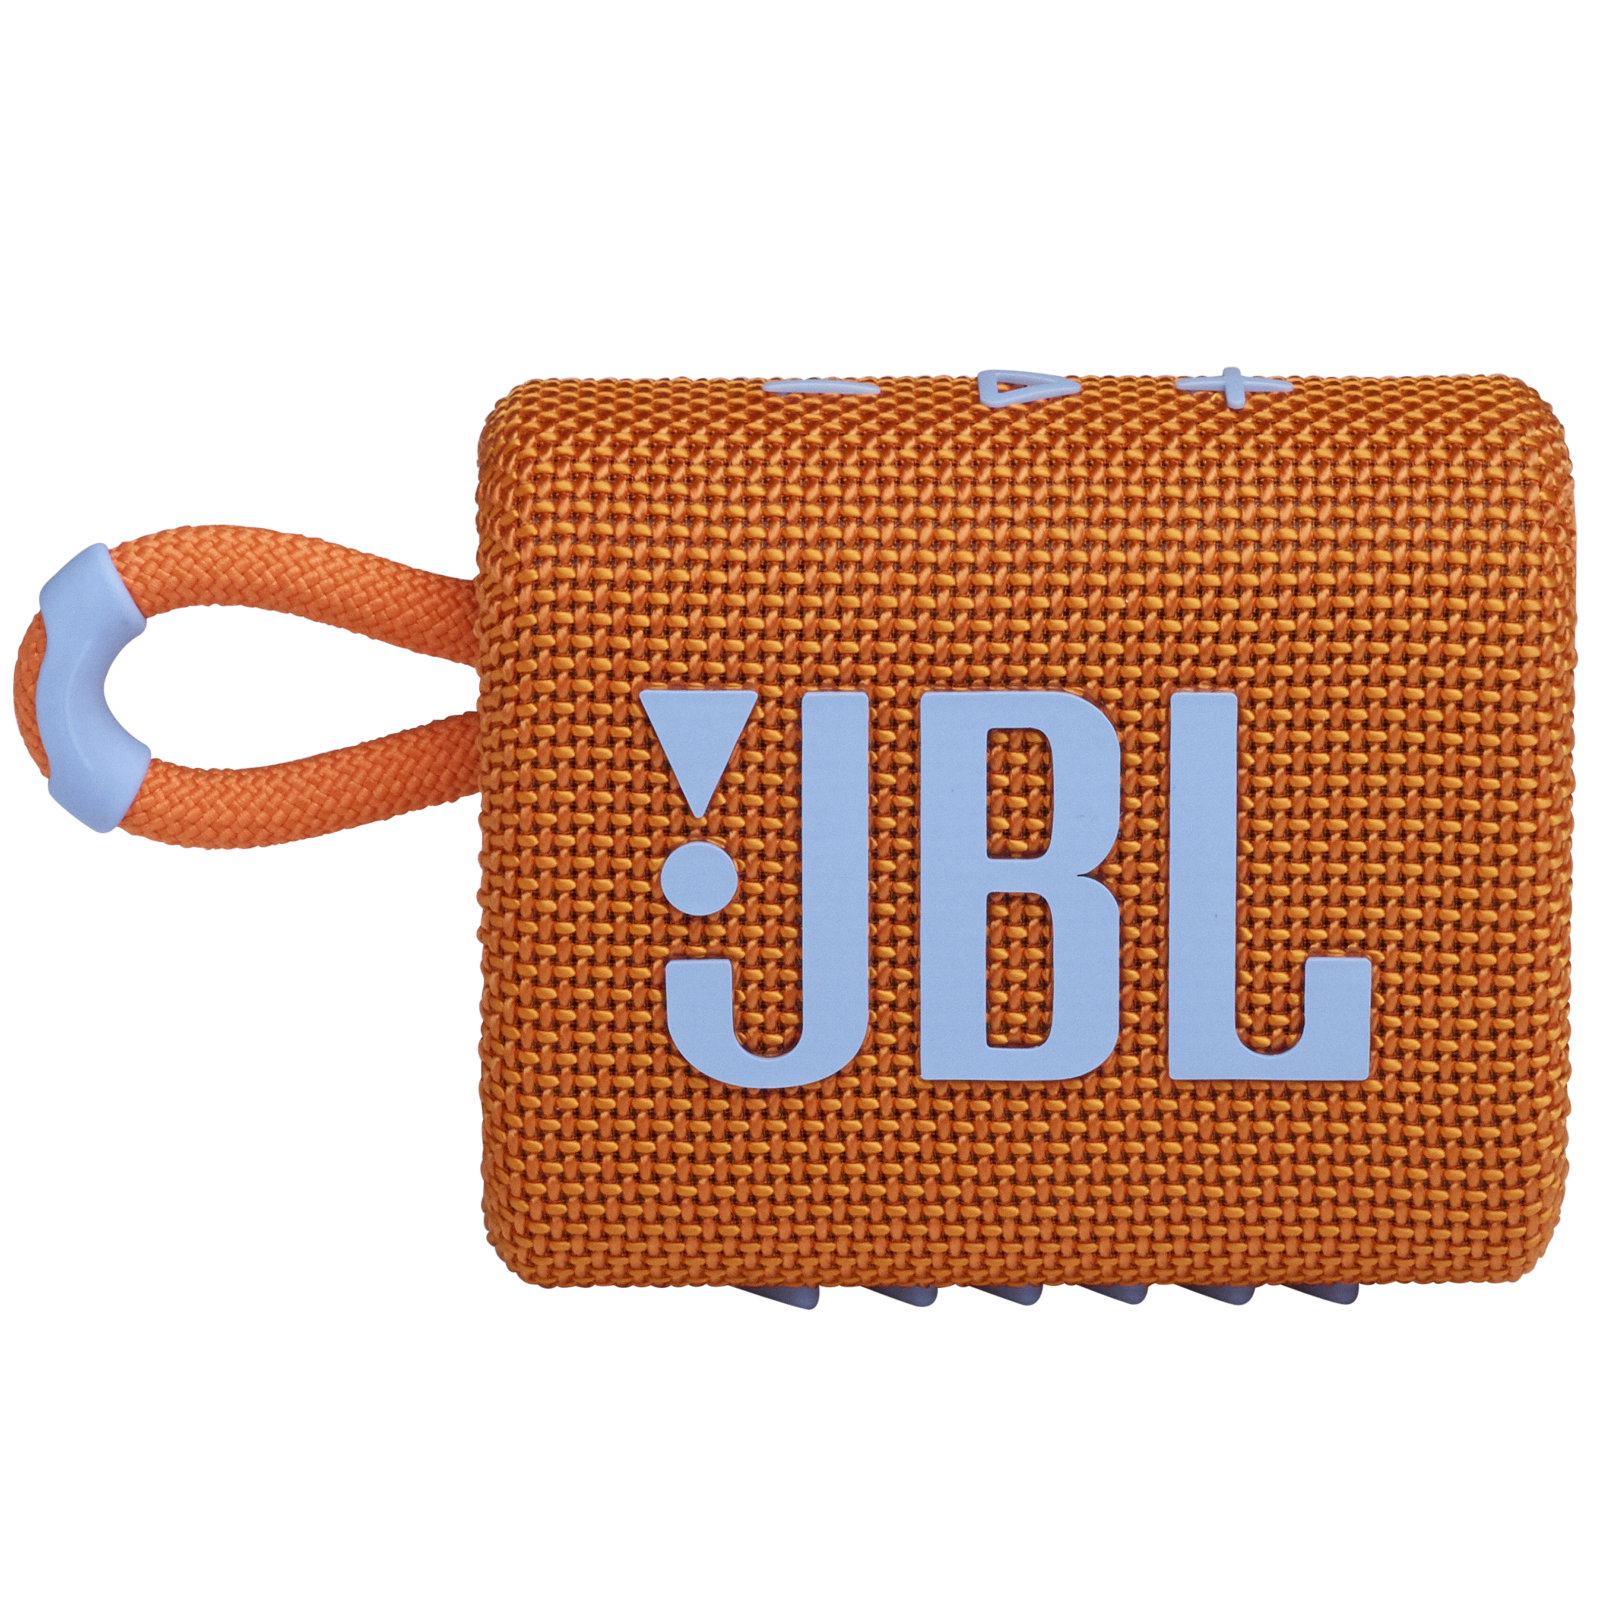 JBL Go 3 - Orange - Portable Waterproof Speaker - Front